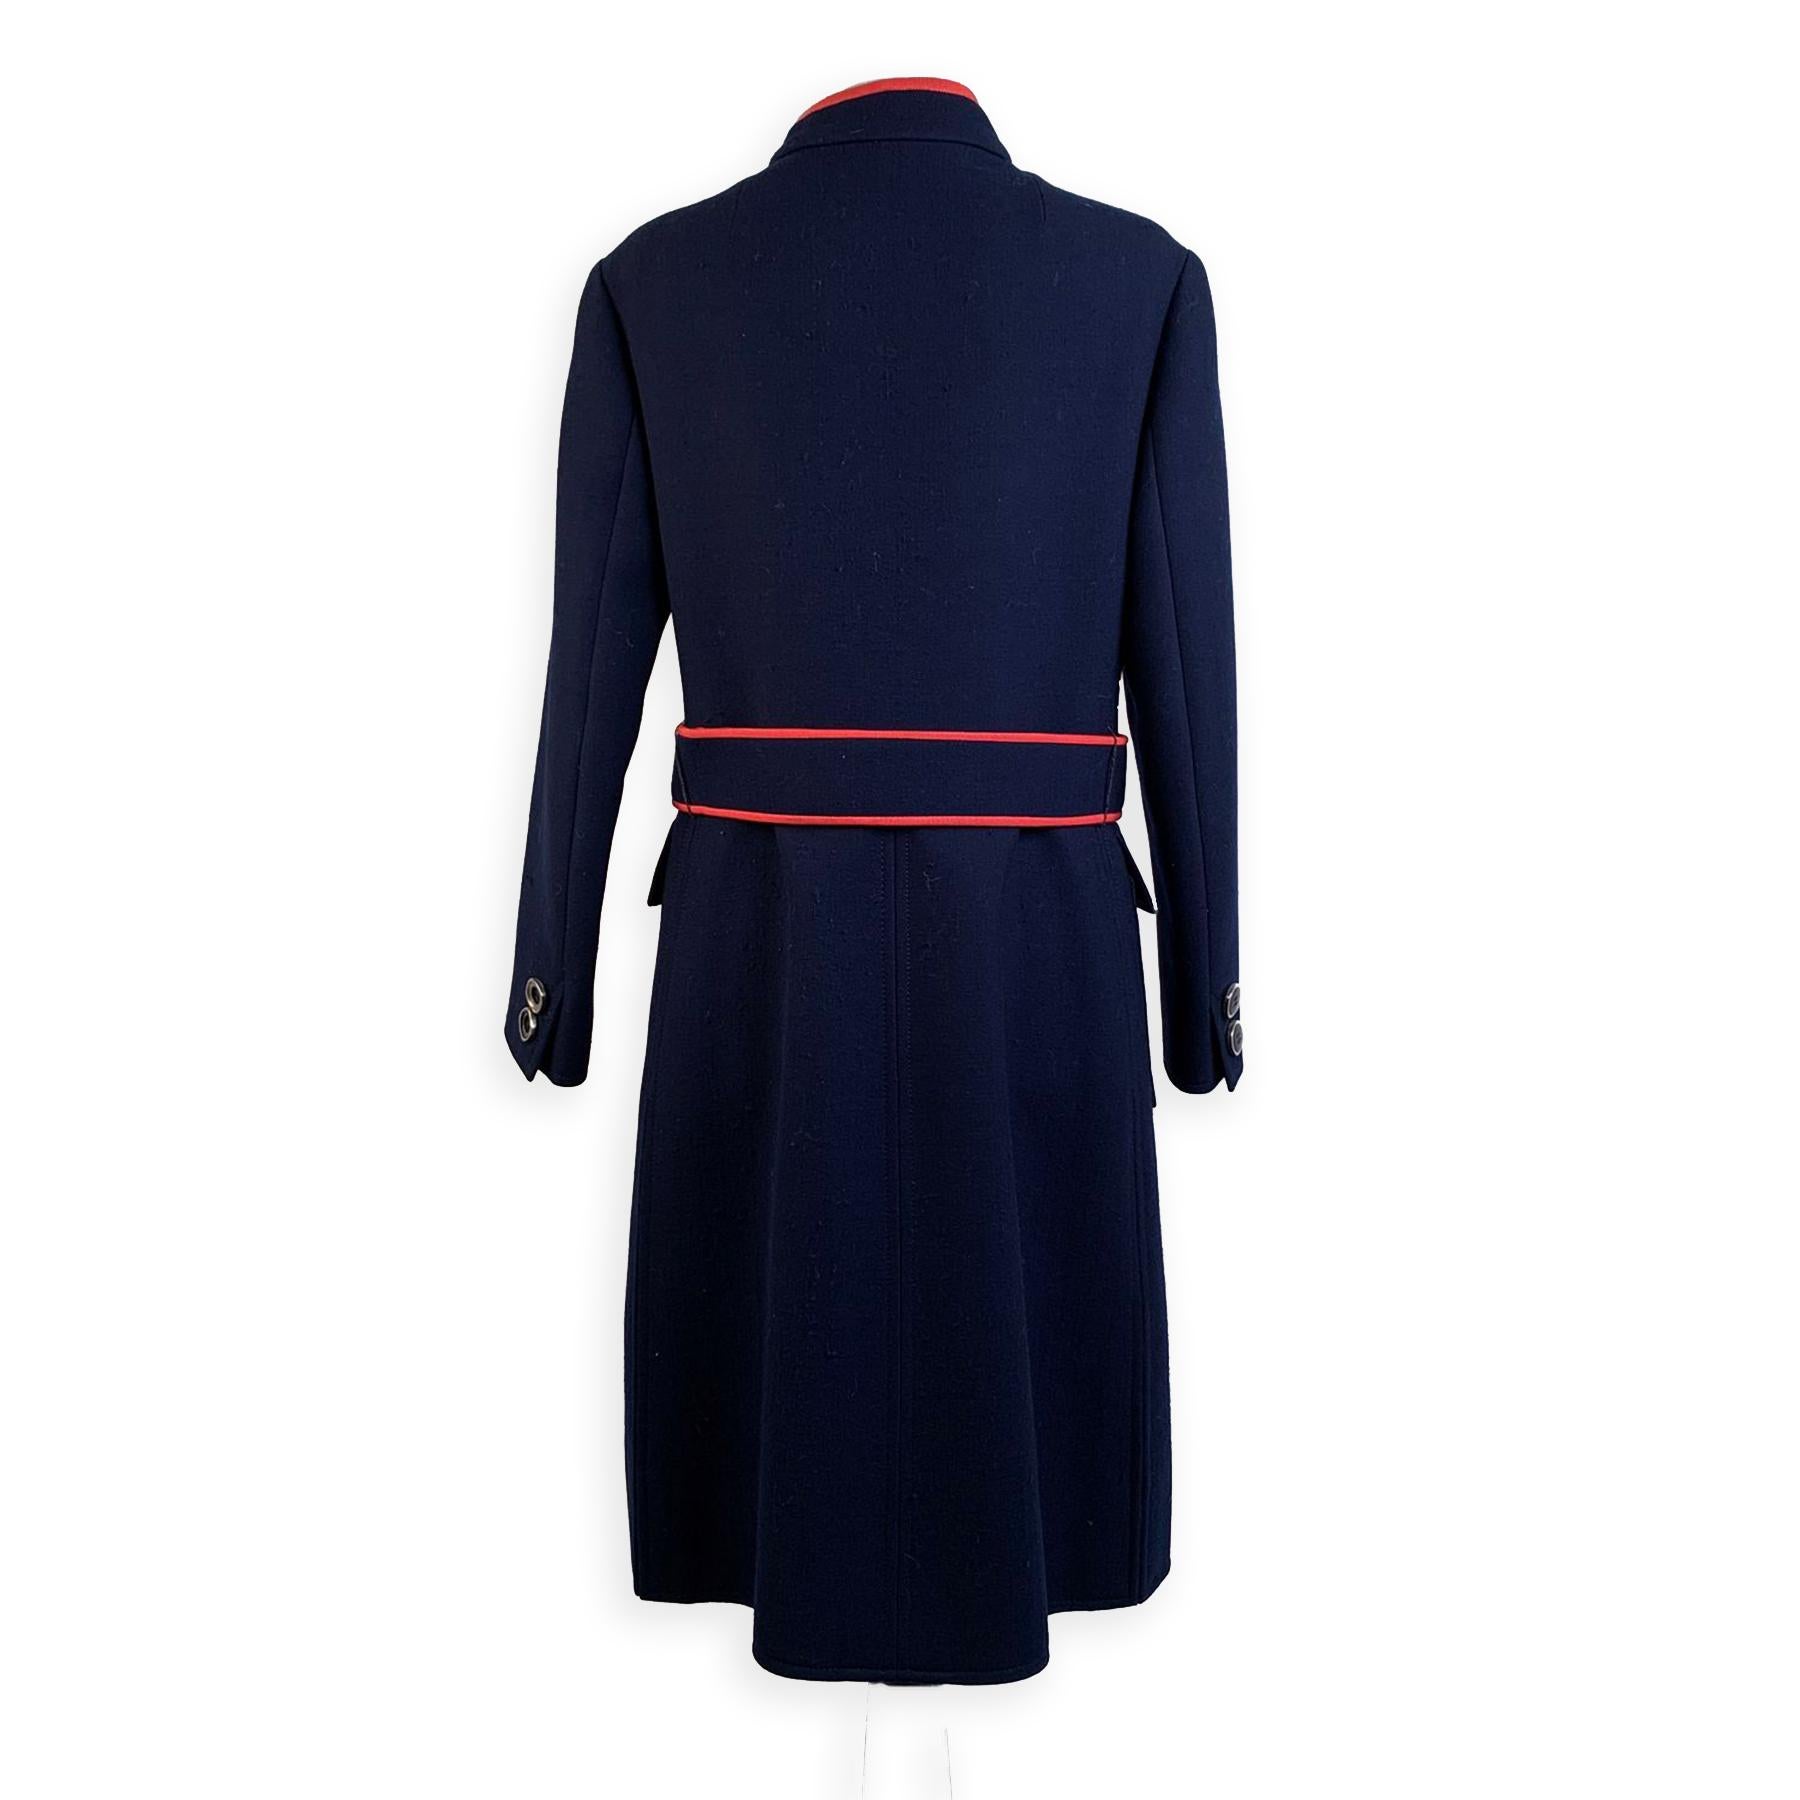 Black Vintage Navy Blue Wool Belted Coat with Contrast Trim